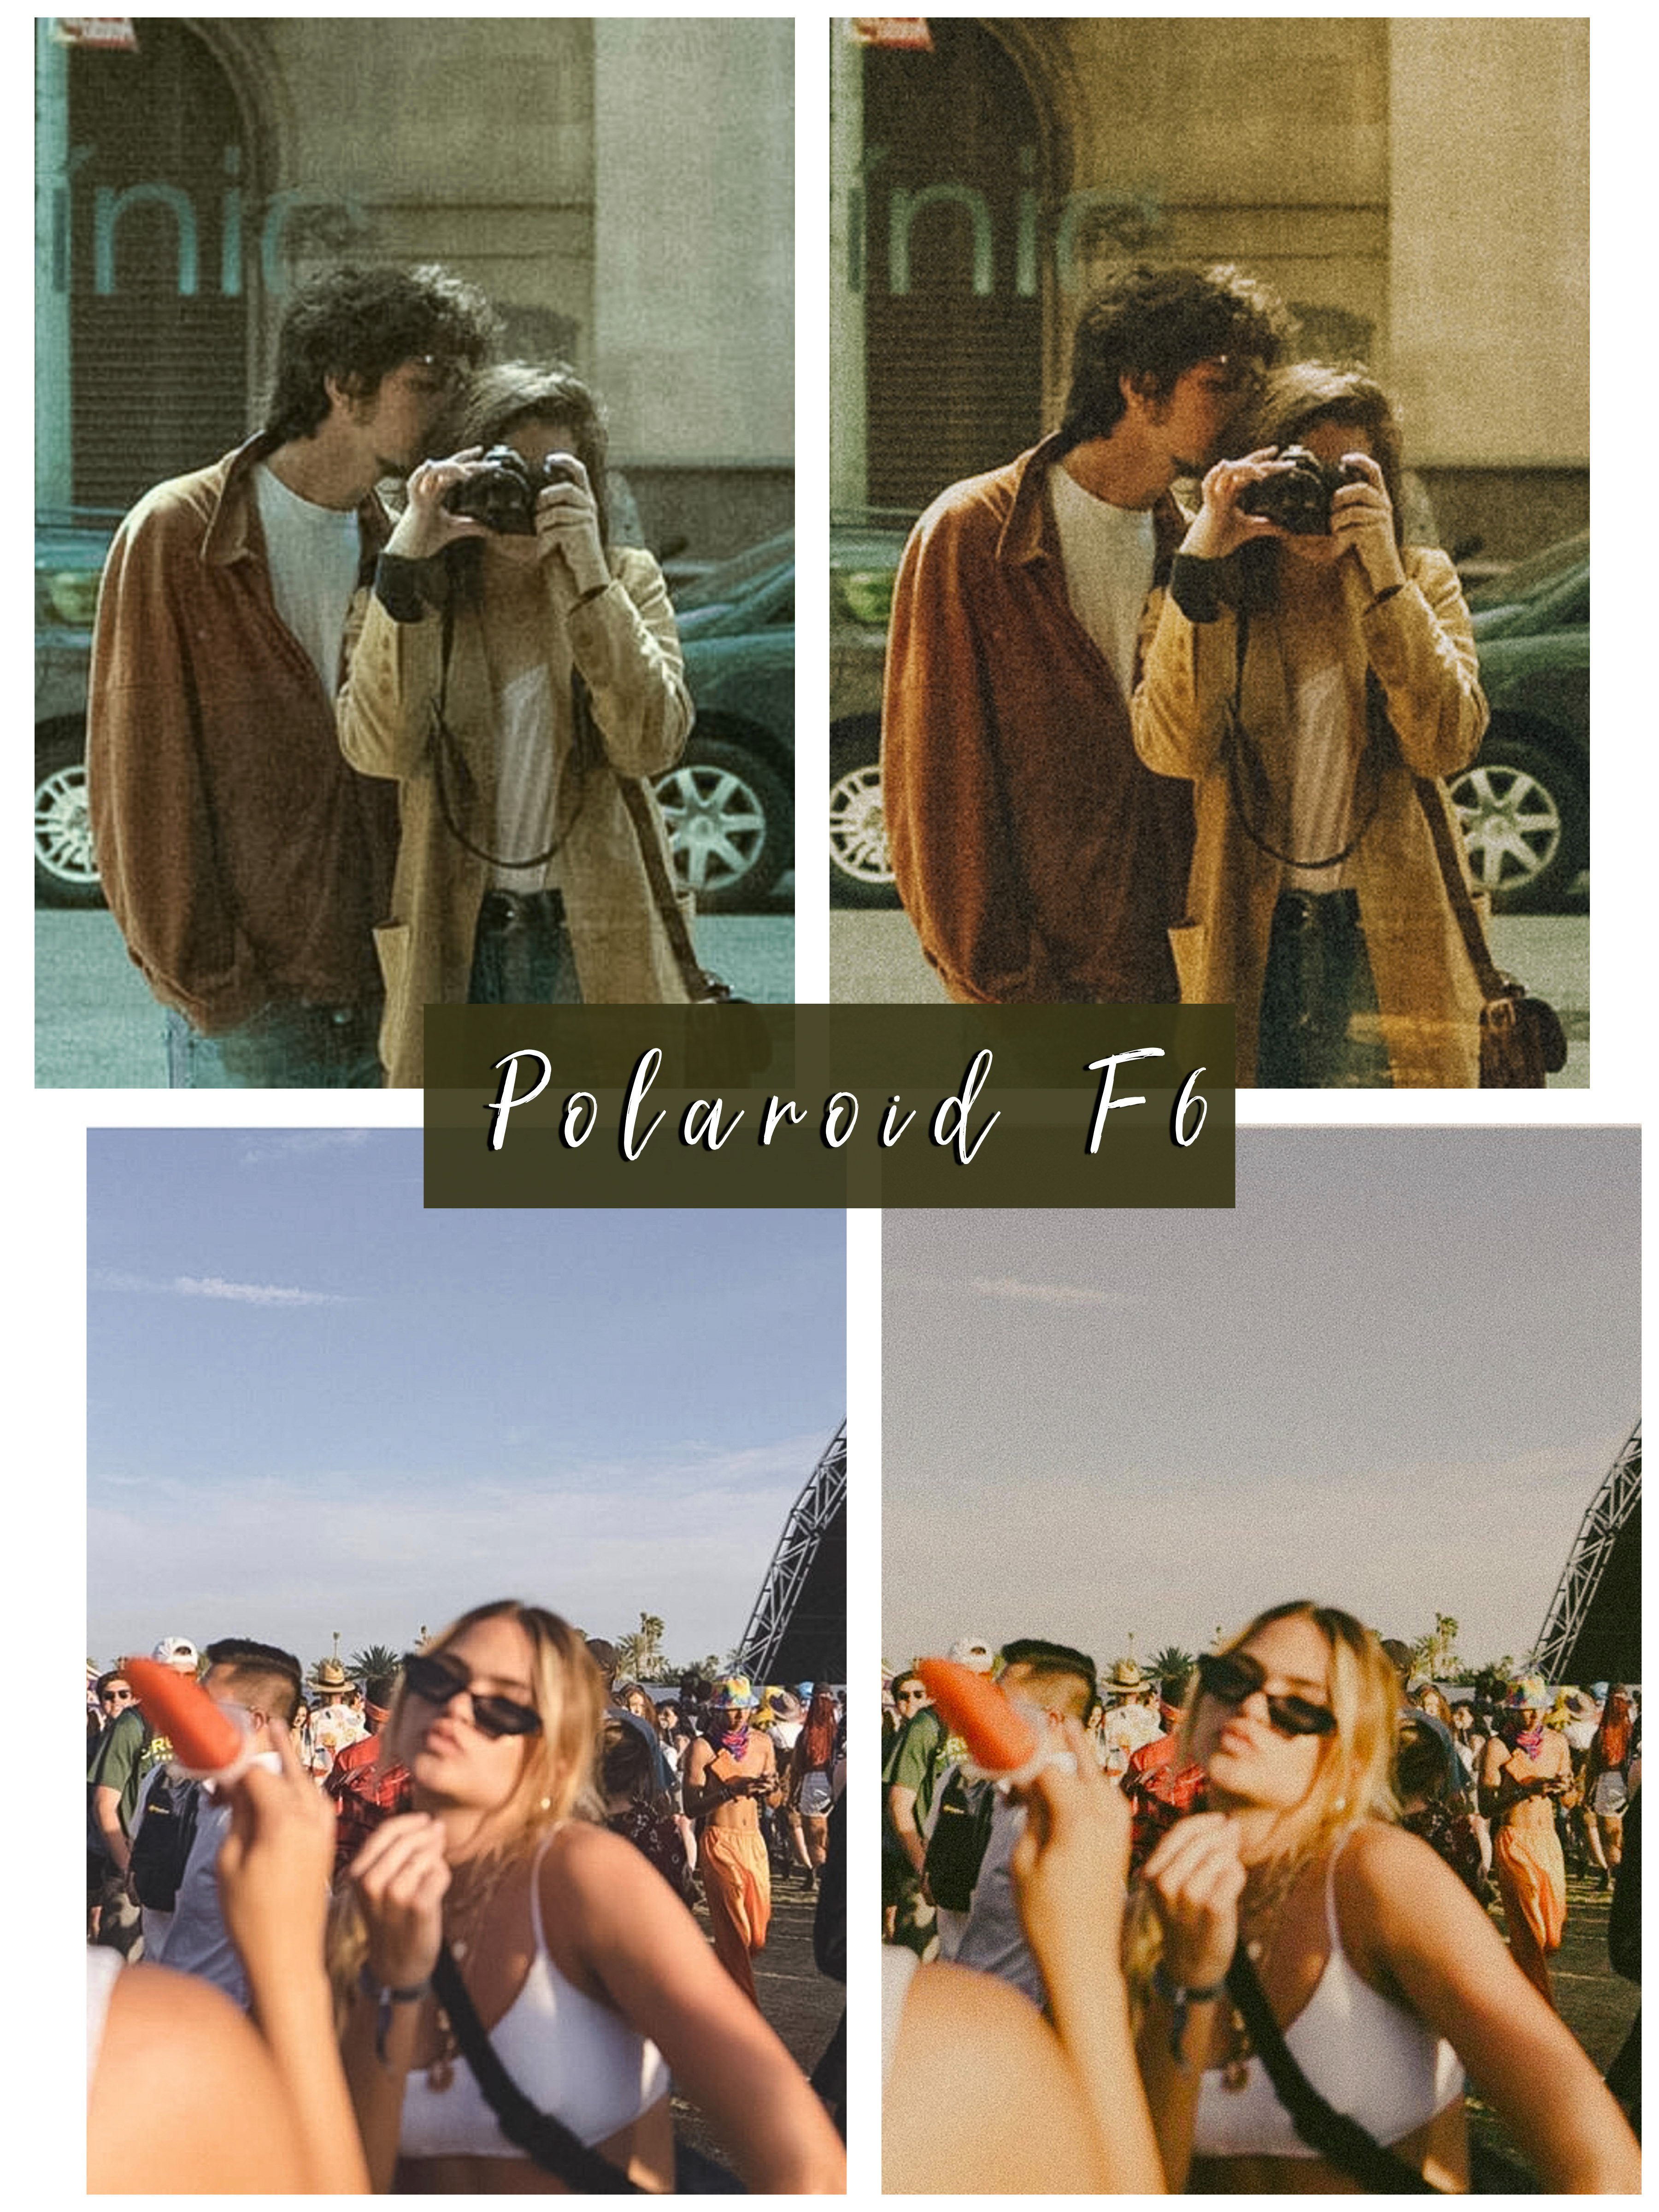 polaroid film moody vintage aesthetic instagram vsco editing phone mobile lightroom filters 5 435